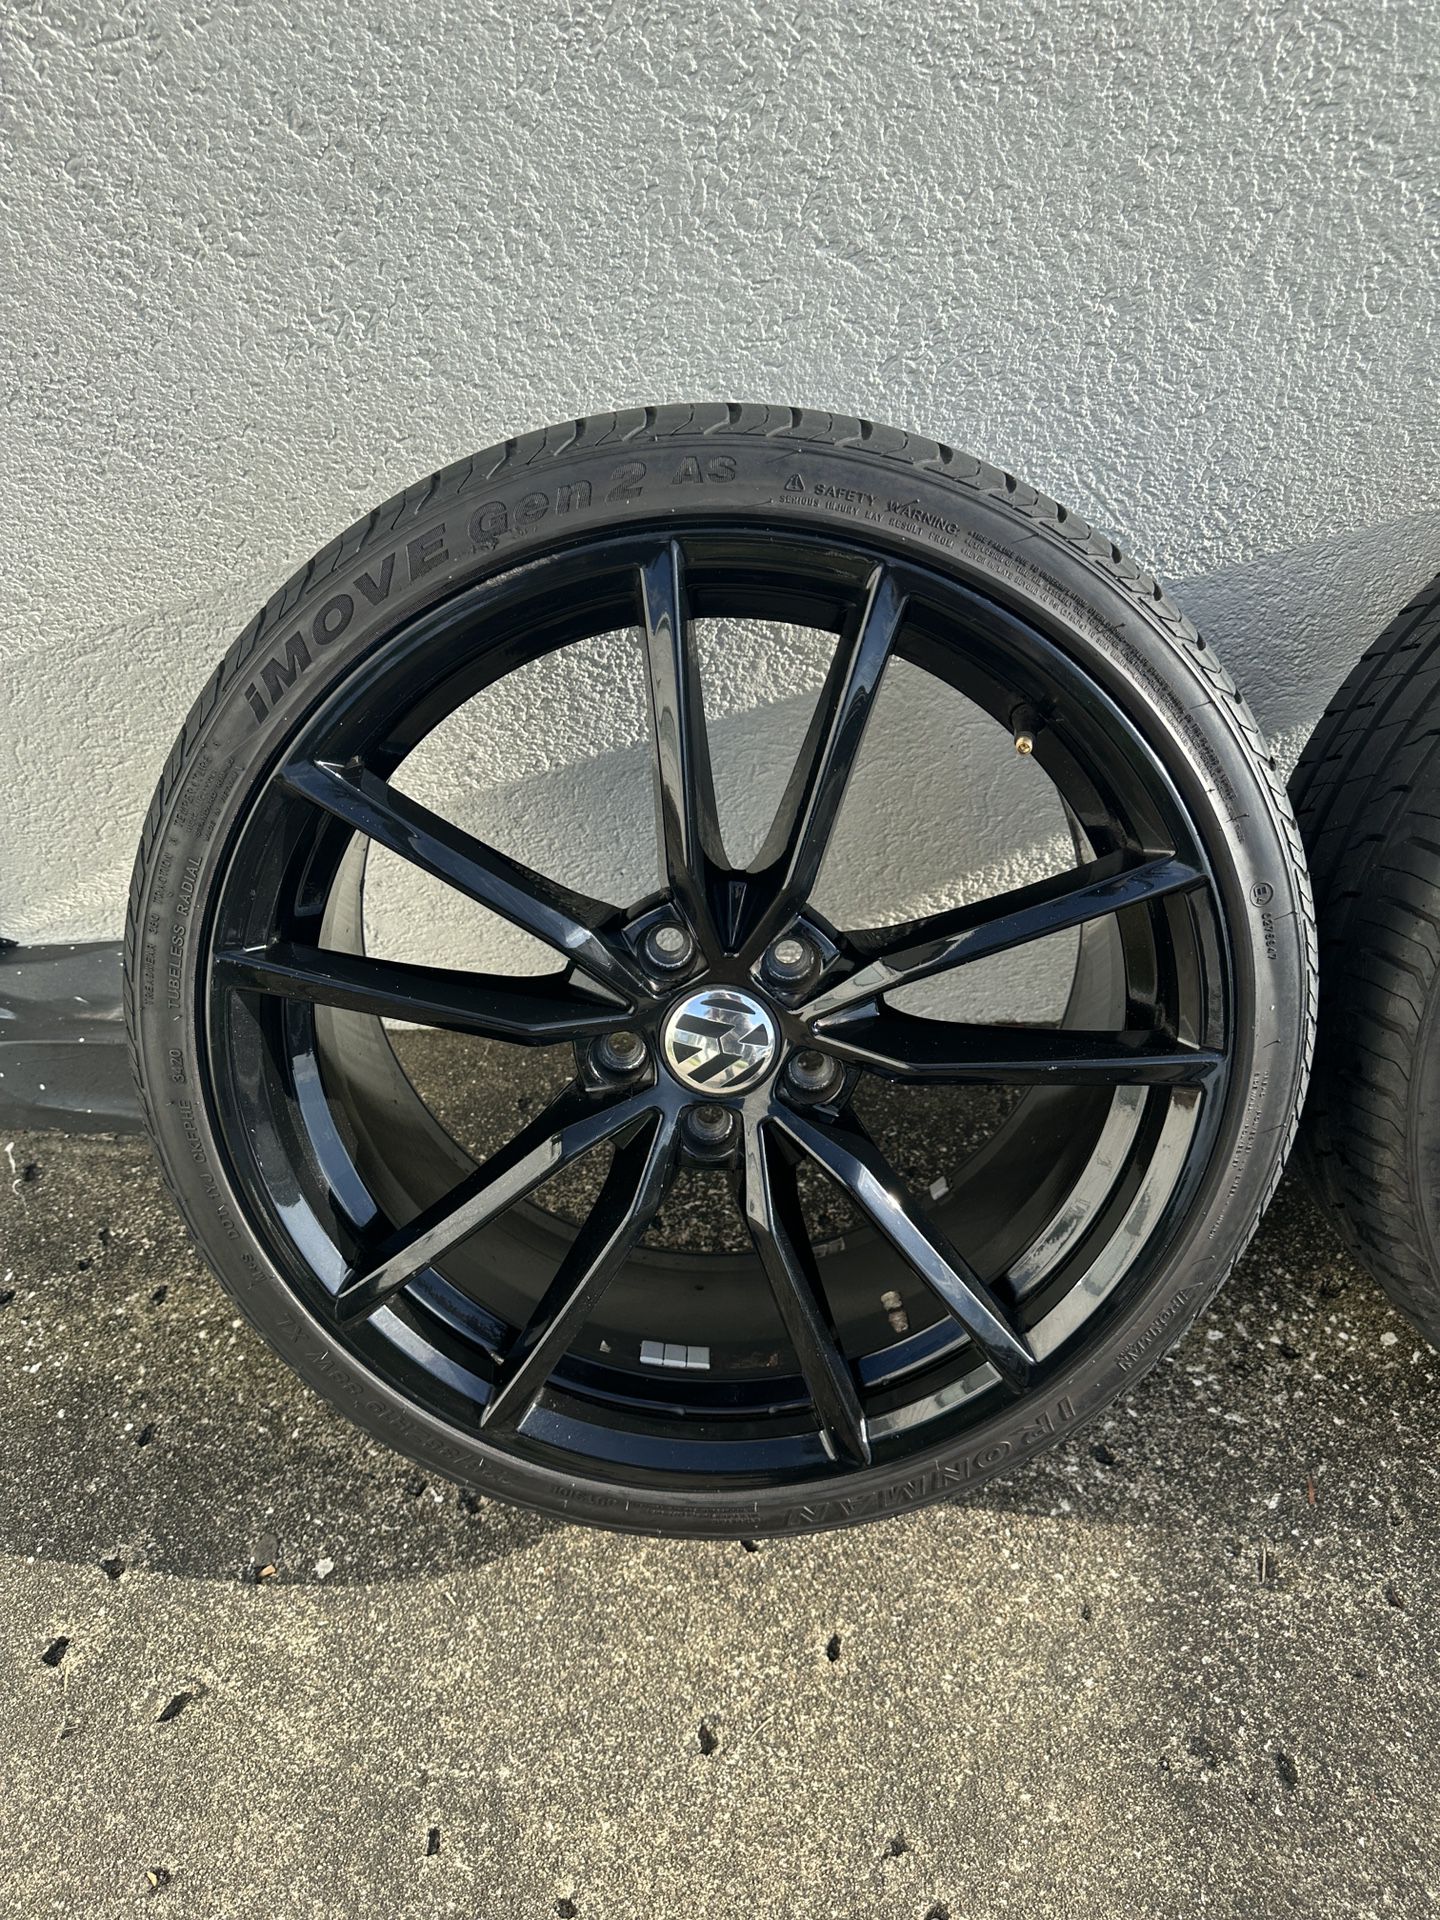 Gloss Black Vw 19” Rims And Tire 5 Lug Pattern